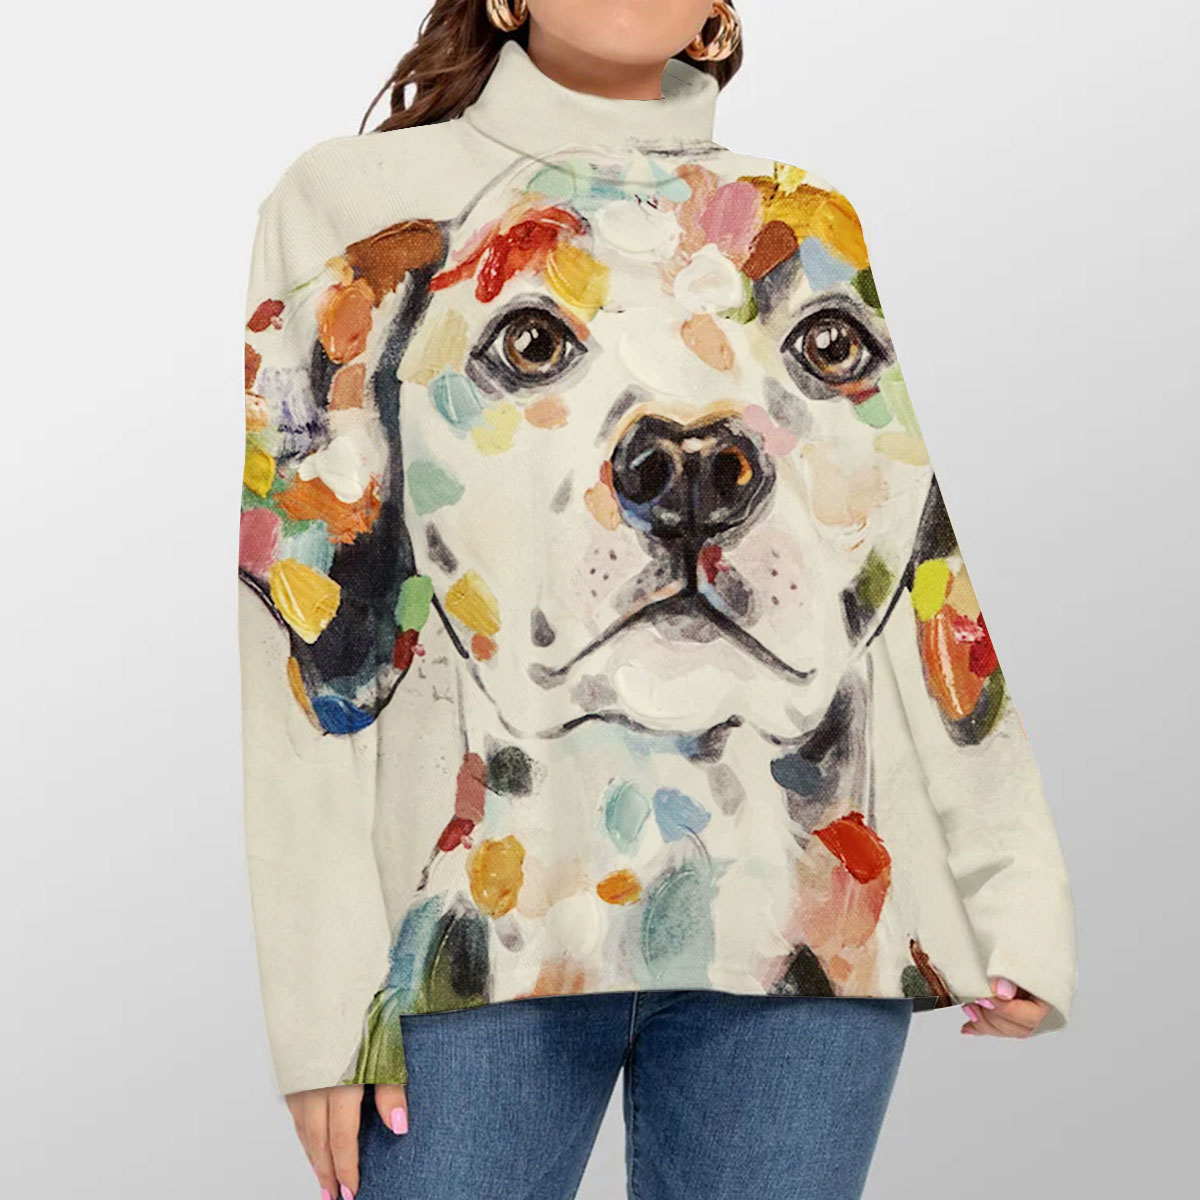 Rainbow Dog Turtleneck Sweater